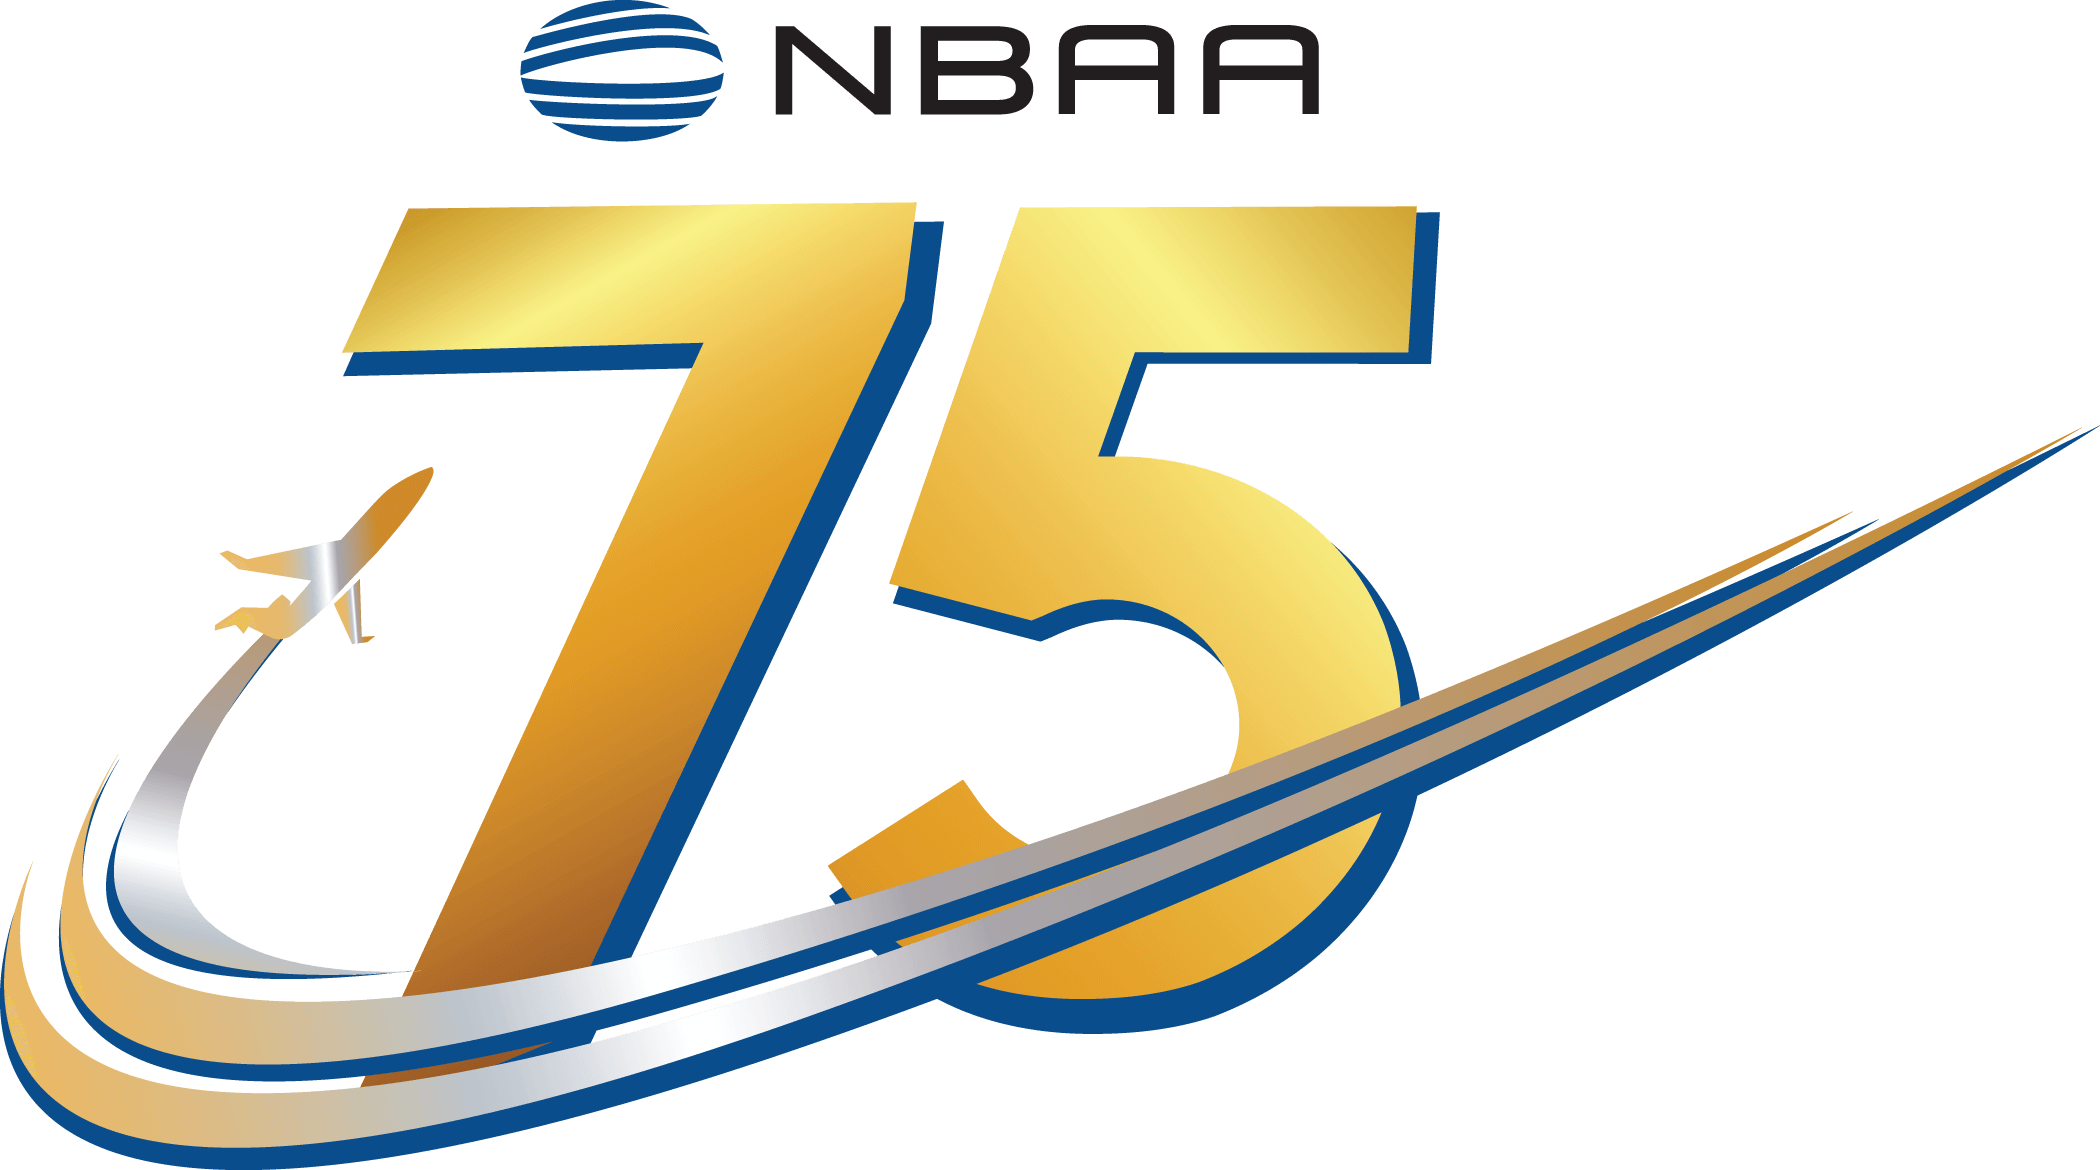 NBAA's 75th Anniversary